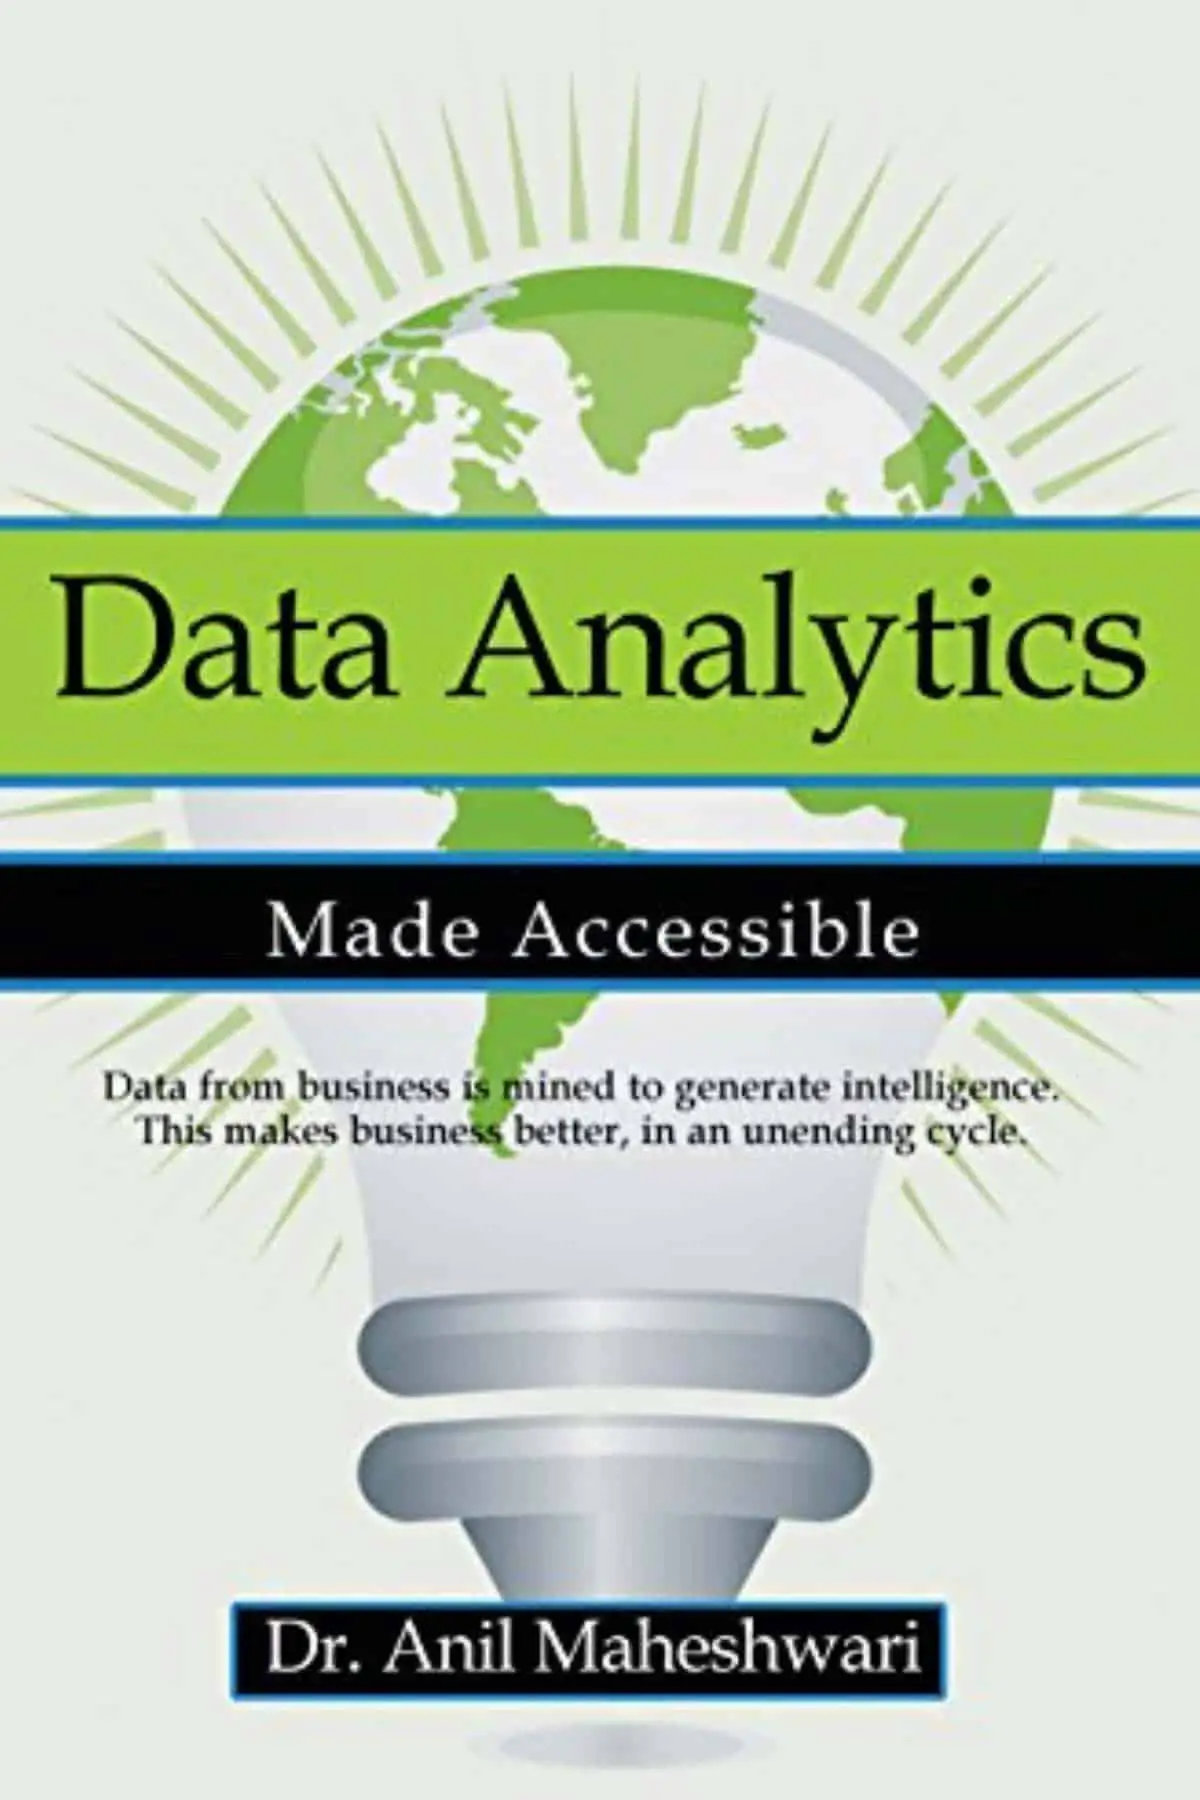 Data Analytics Made Accessible by Anil Maheshwari ($9.99) | Amazon's Best Selling Tech Kindle eBooks